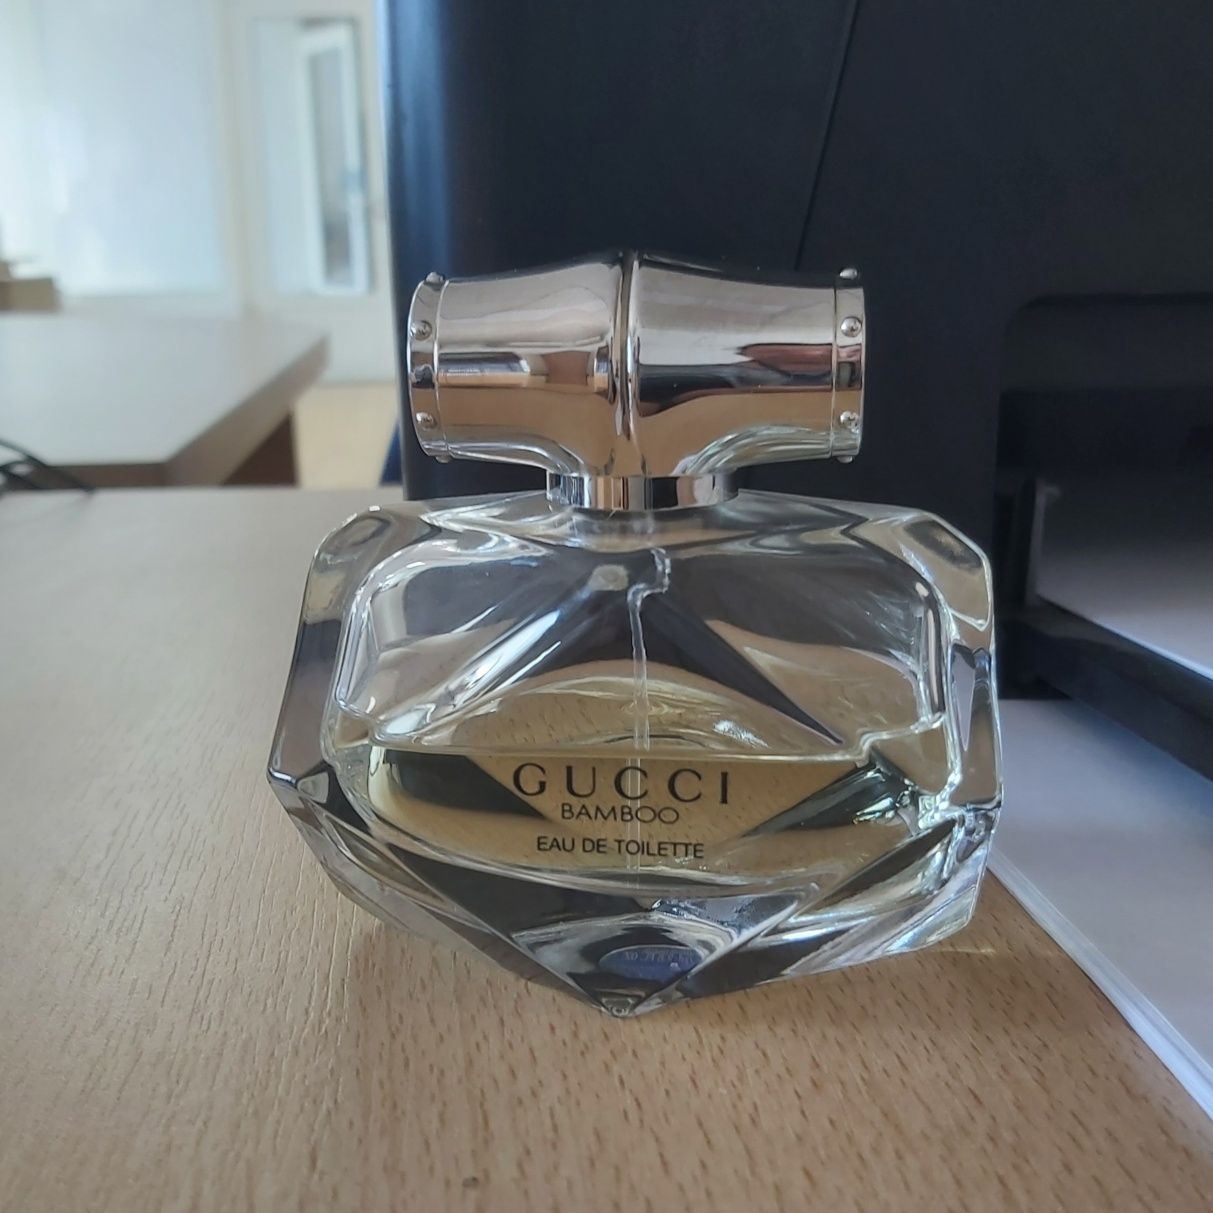 Gucci Bamboo, 75 ml original